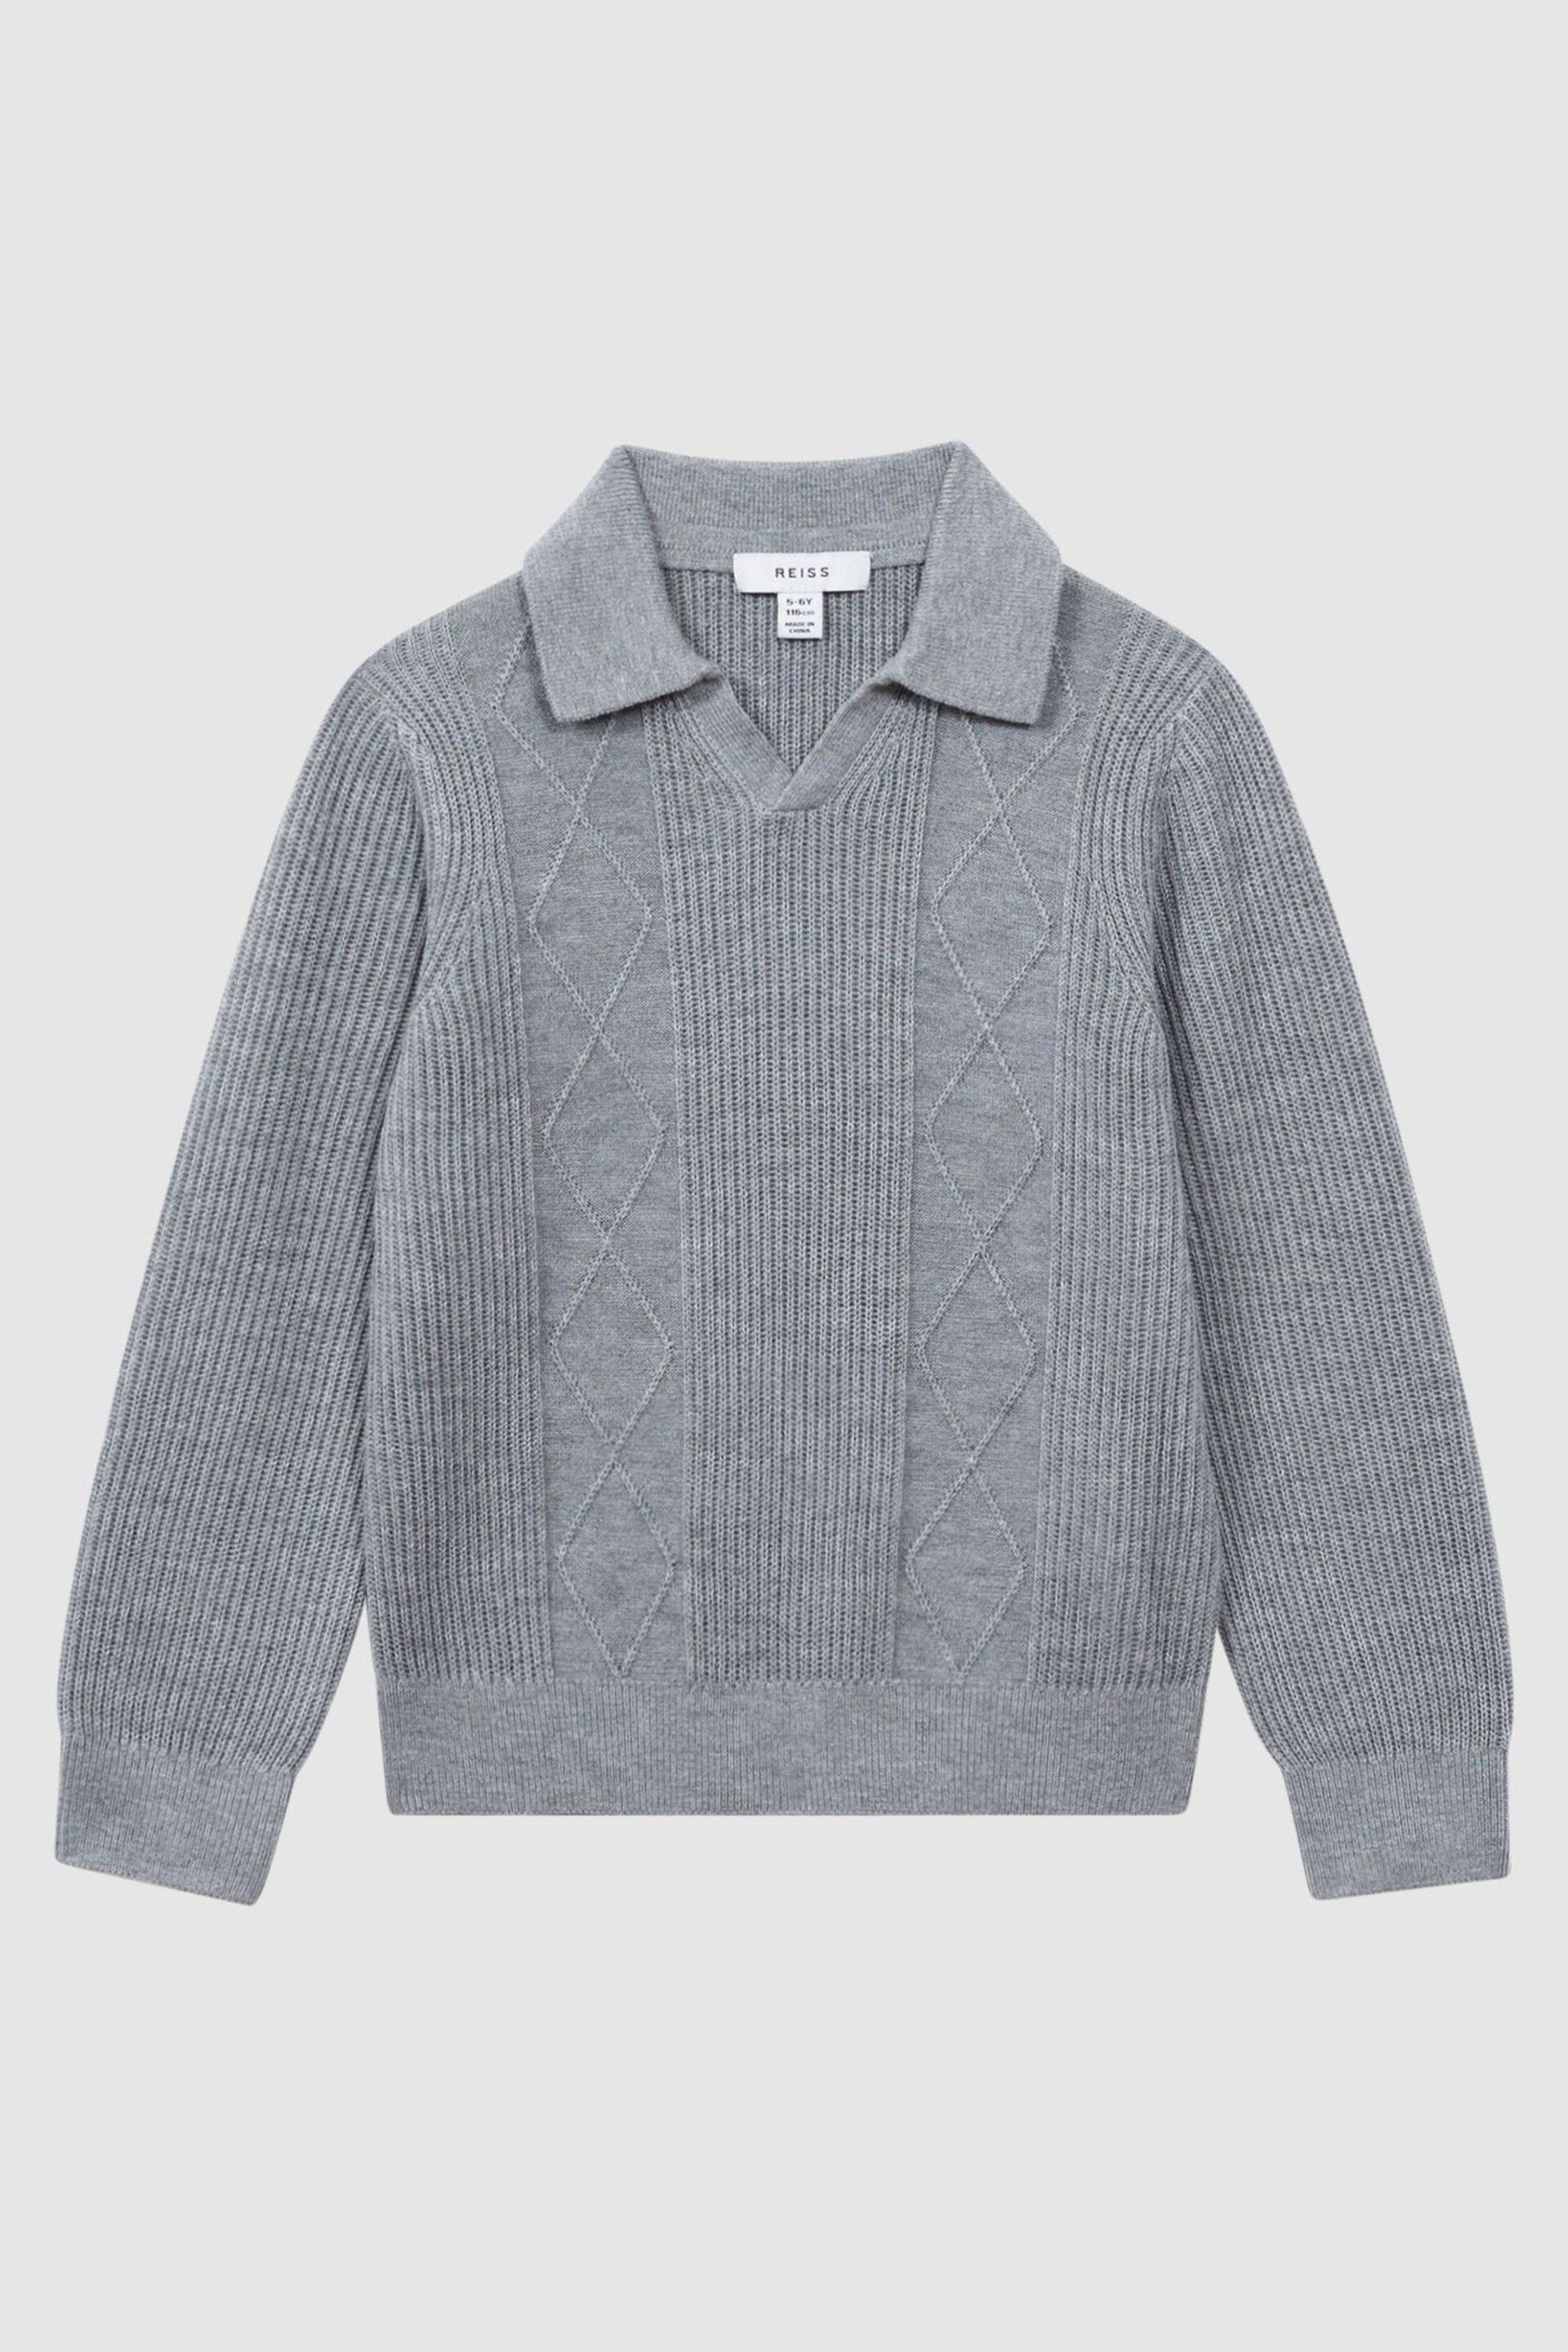 Reiss Soft Grey Melange Malik Junior Knitted Open-Collar Top - Image 2 of 6